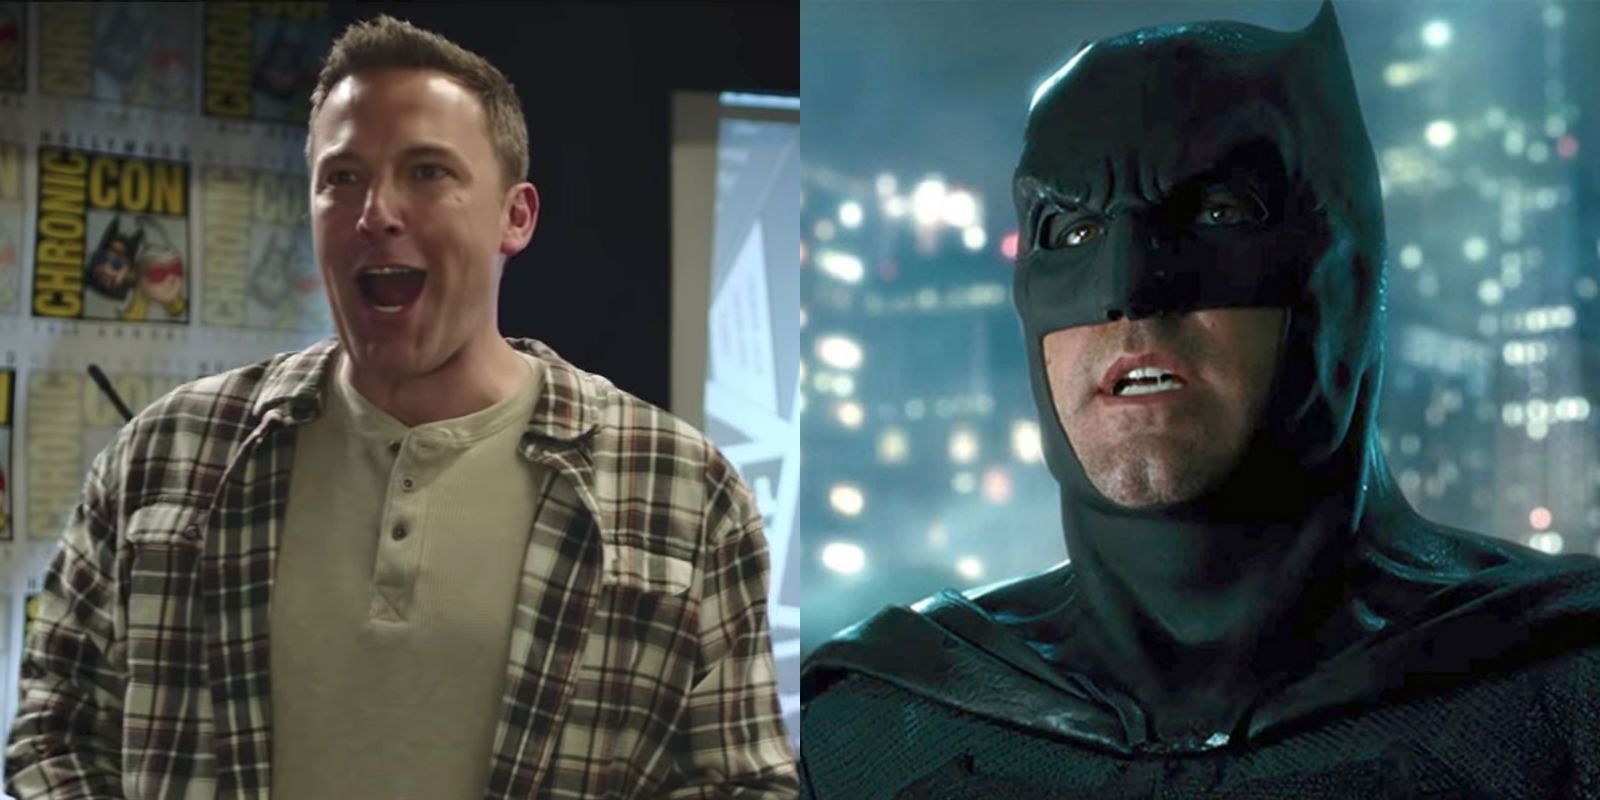 Ben Affleck in Jay and Silent Bob Reboot and as Batman